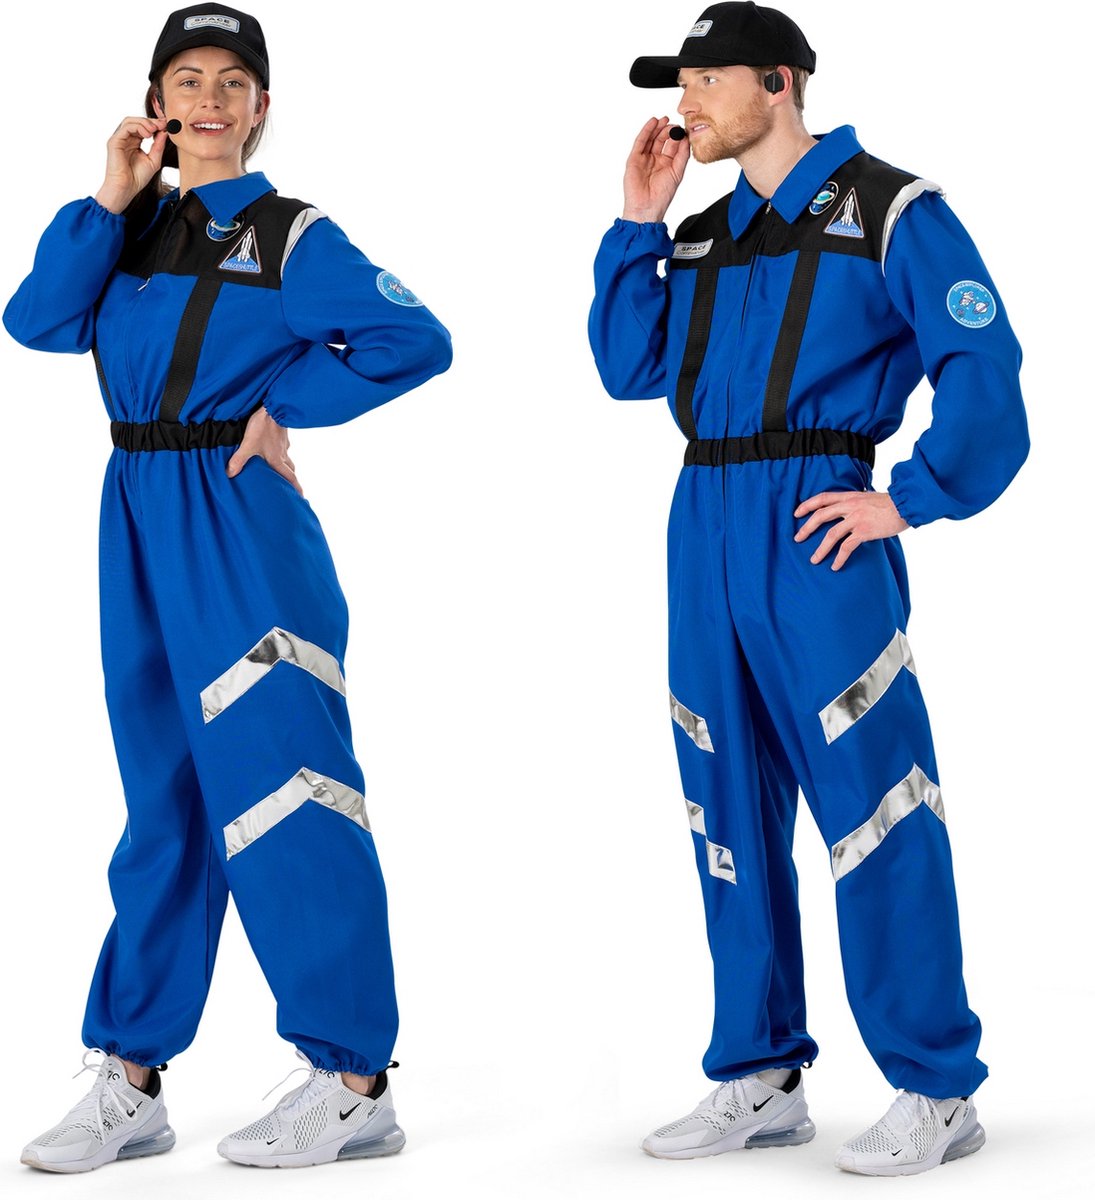 Funny Fashion - Science Fiction & Space Kostuum - Astronaut In Training Kostuum - Blauw - XXL - Carnavalskleding - Verkleedkleding